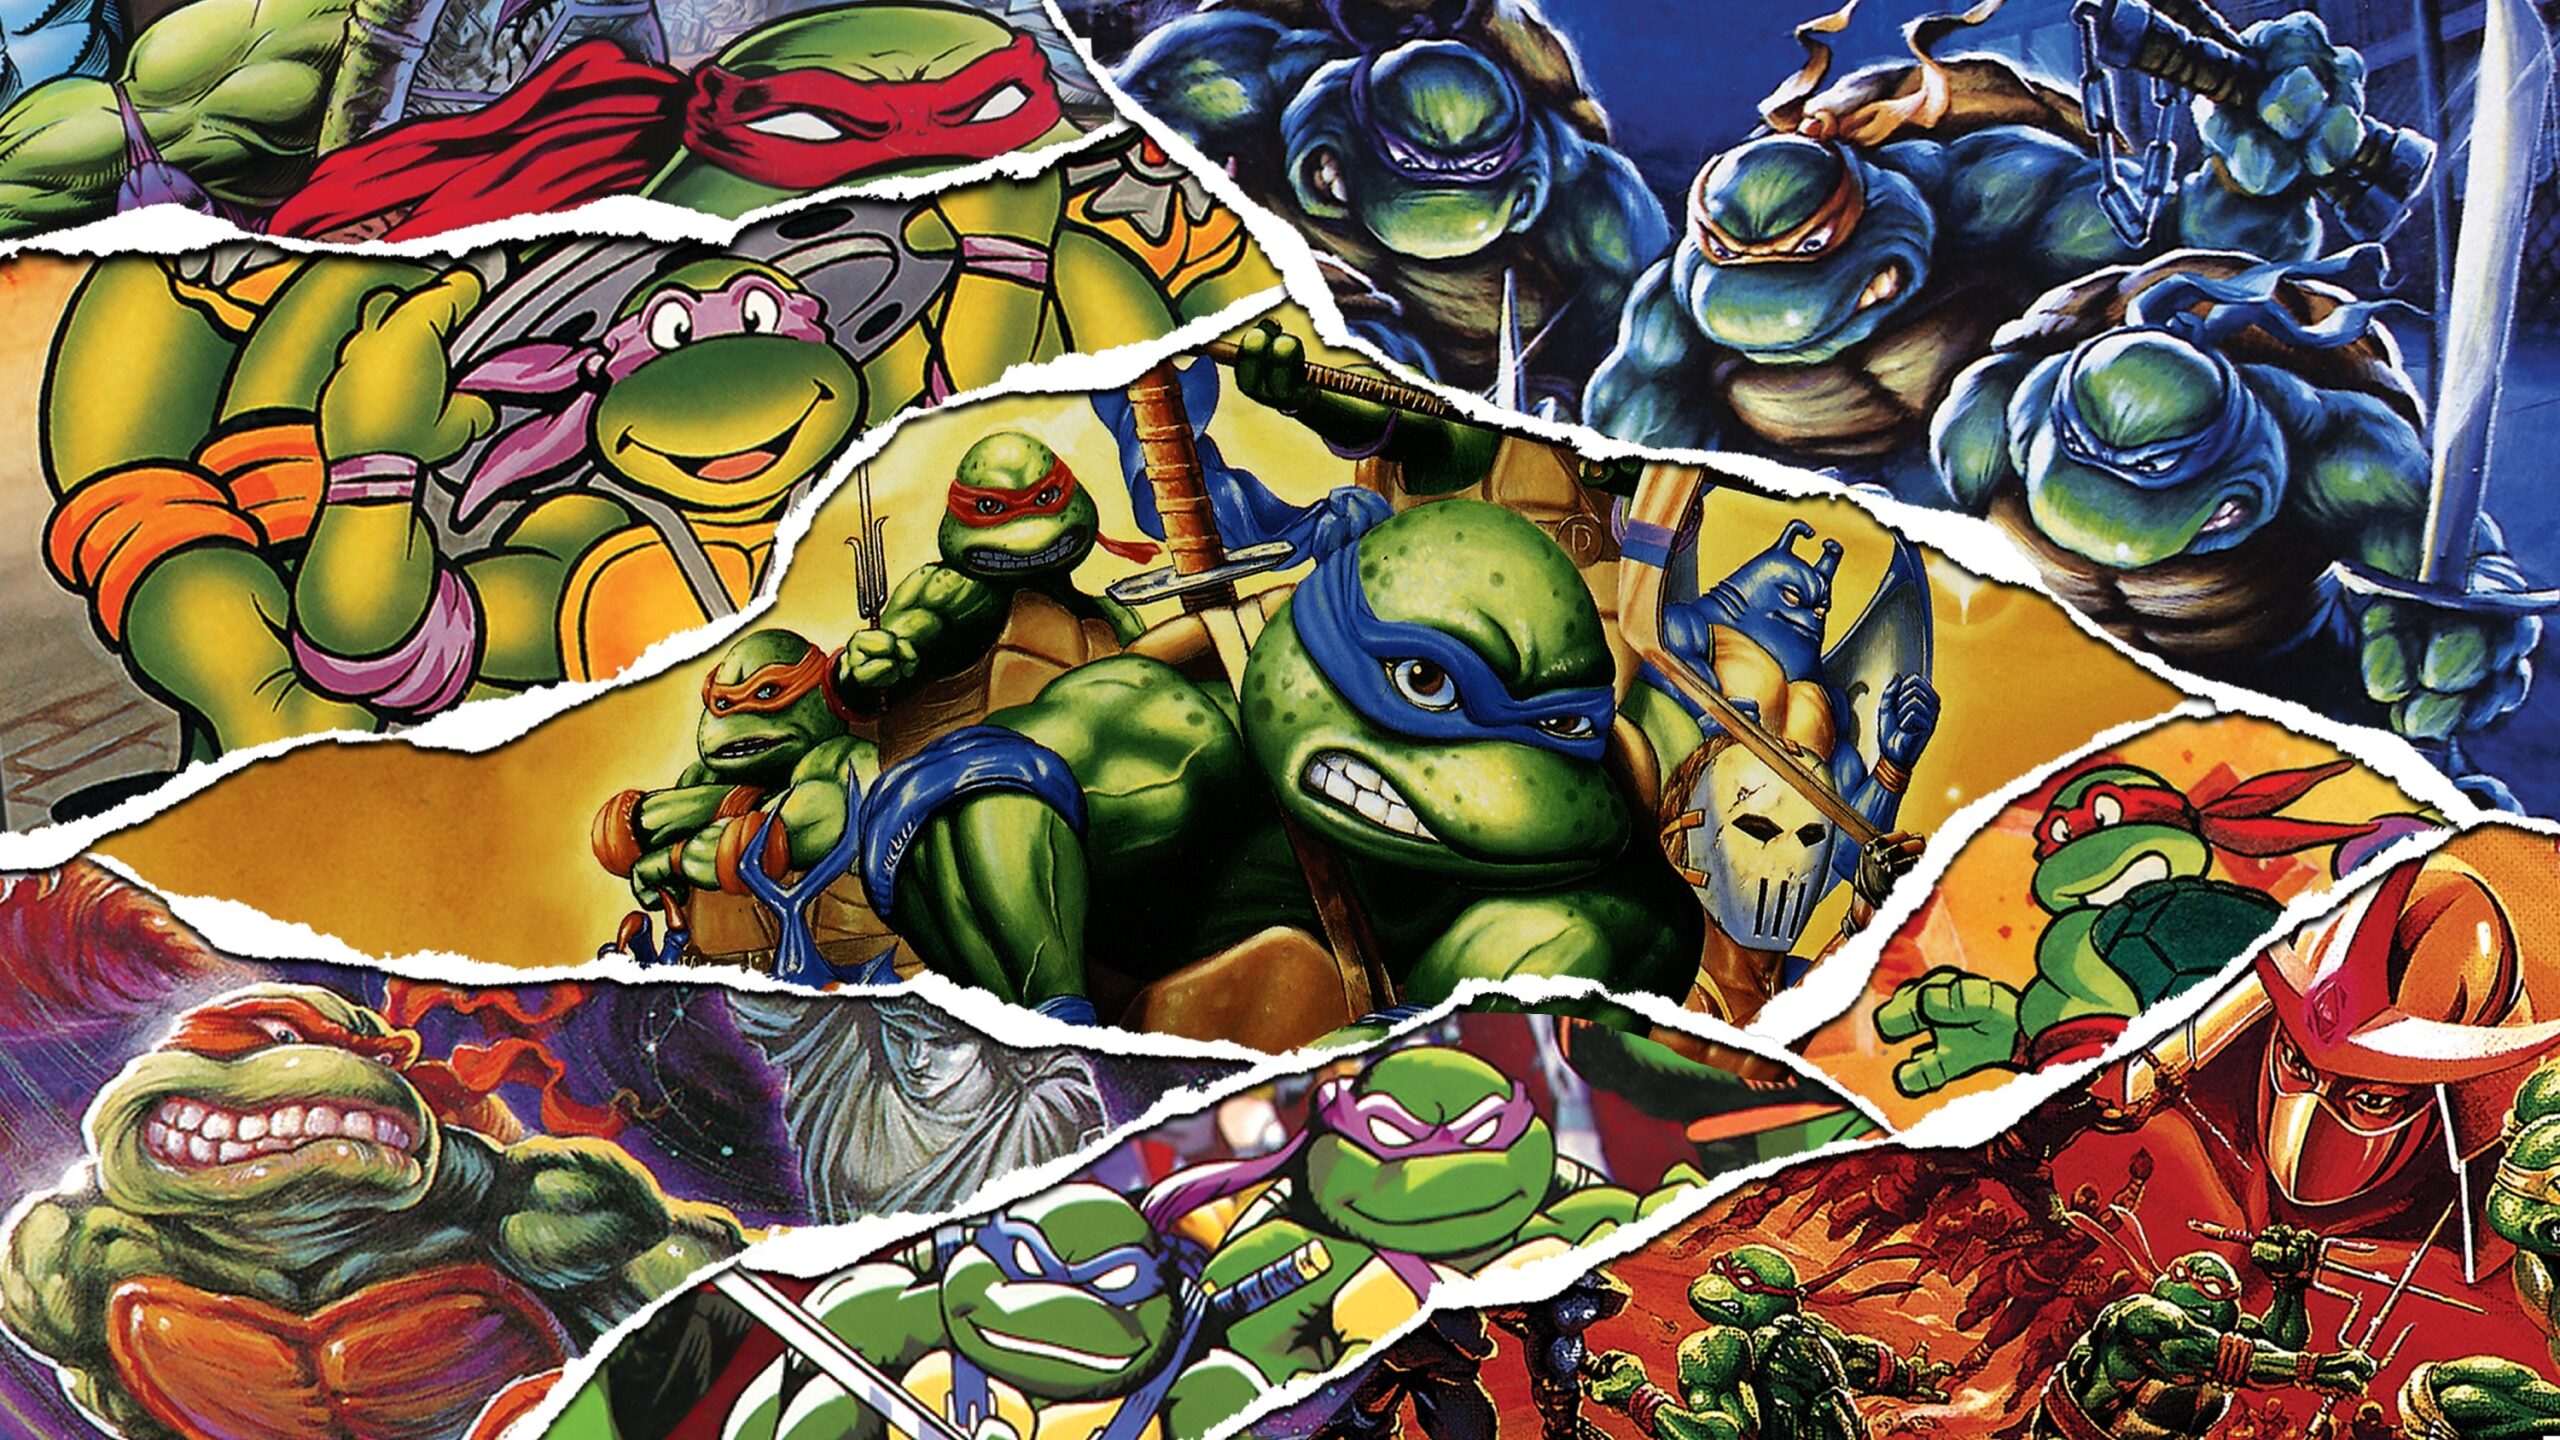 Teenage Mutant Ninja Turtles The Cowabunga Collection Recensione